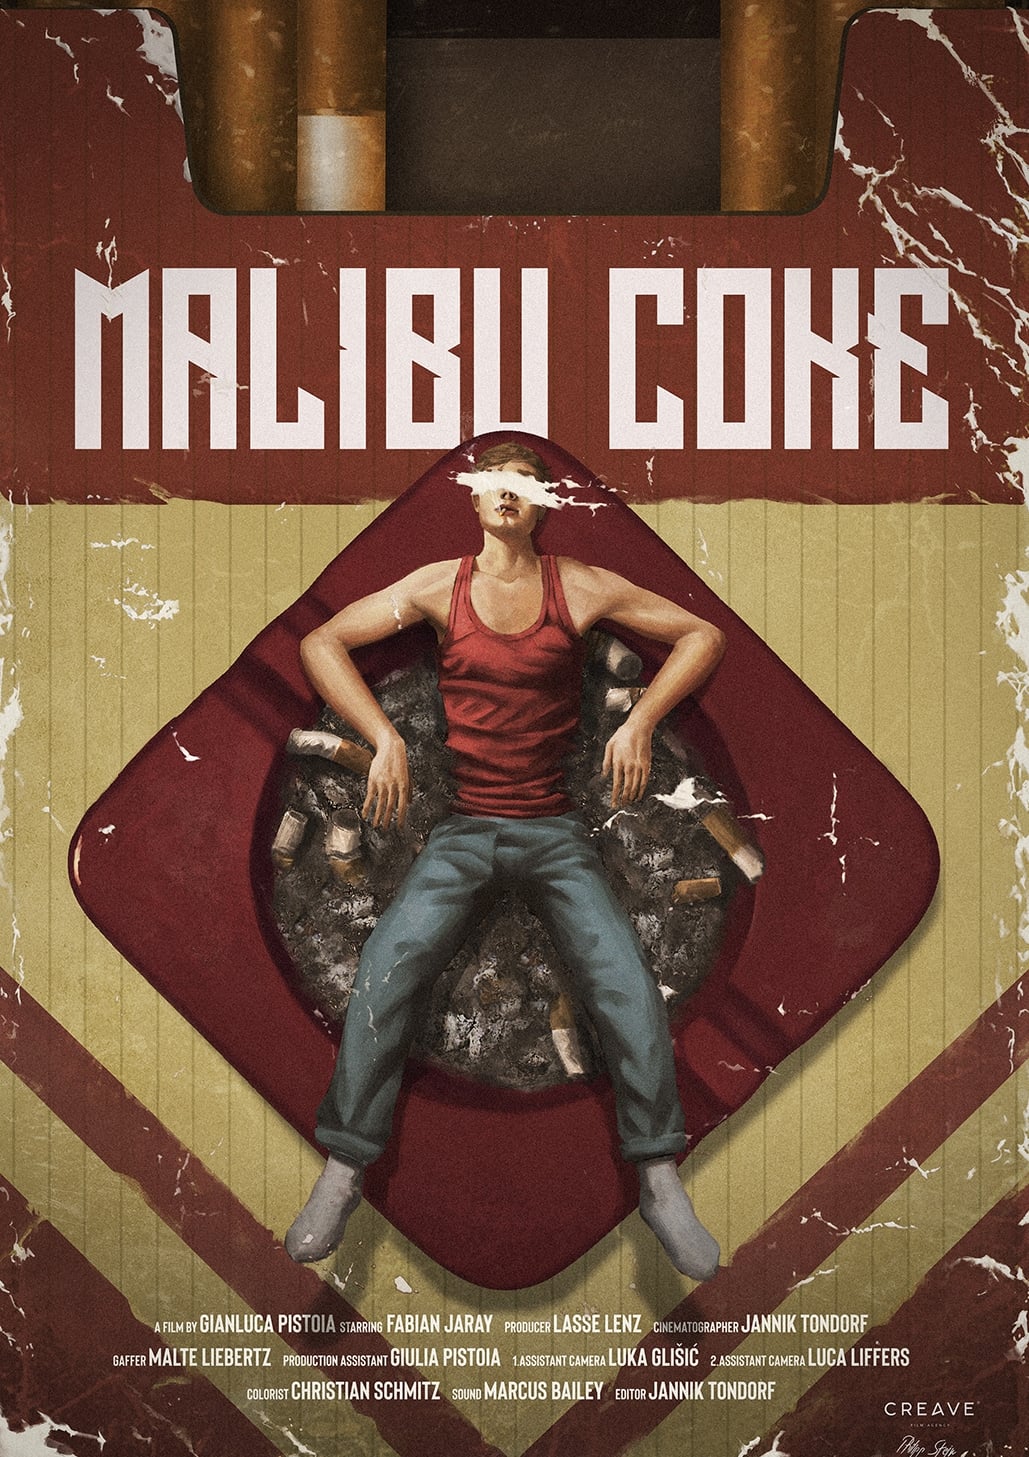 Malibu Coke